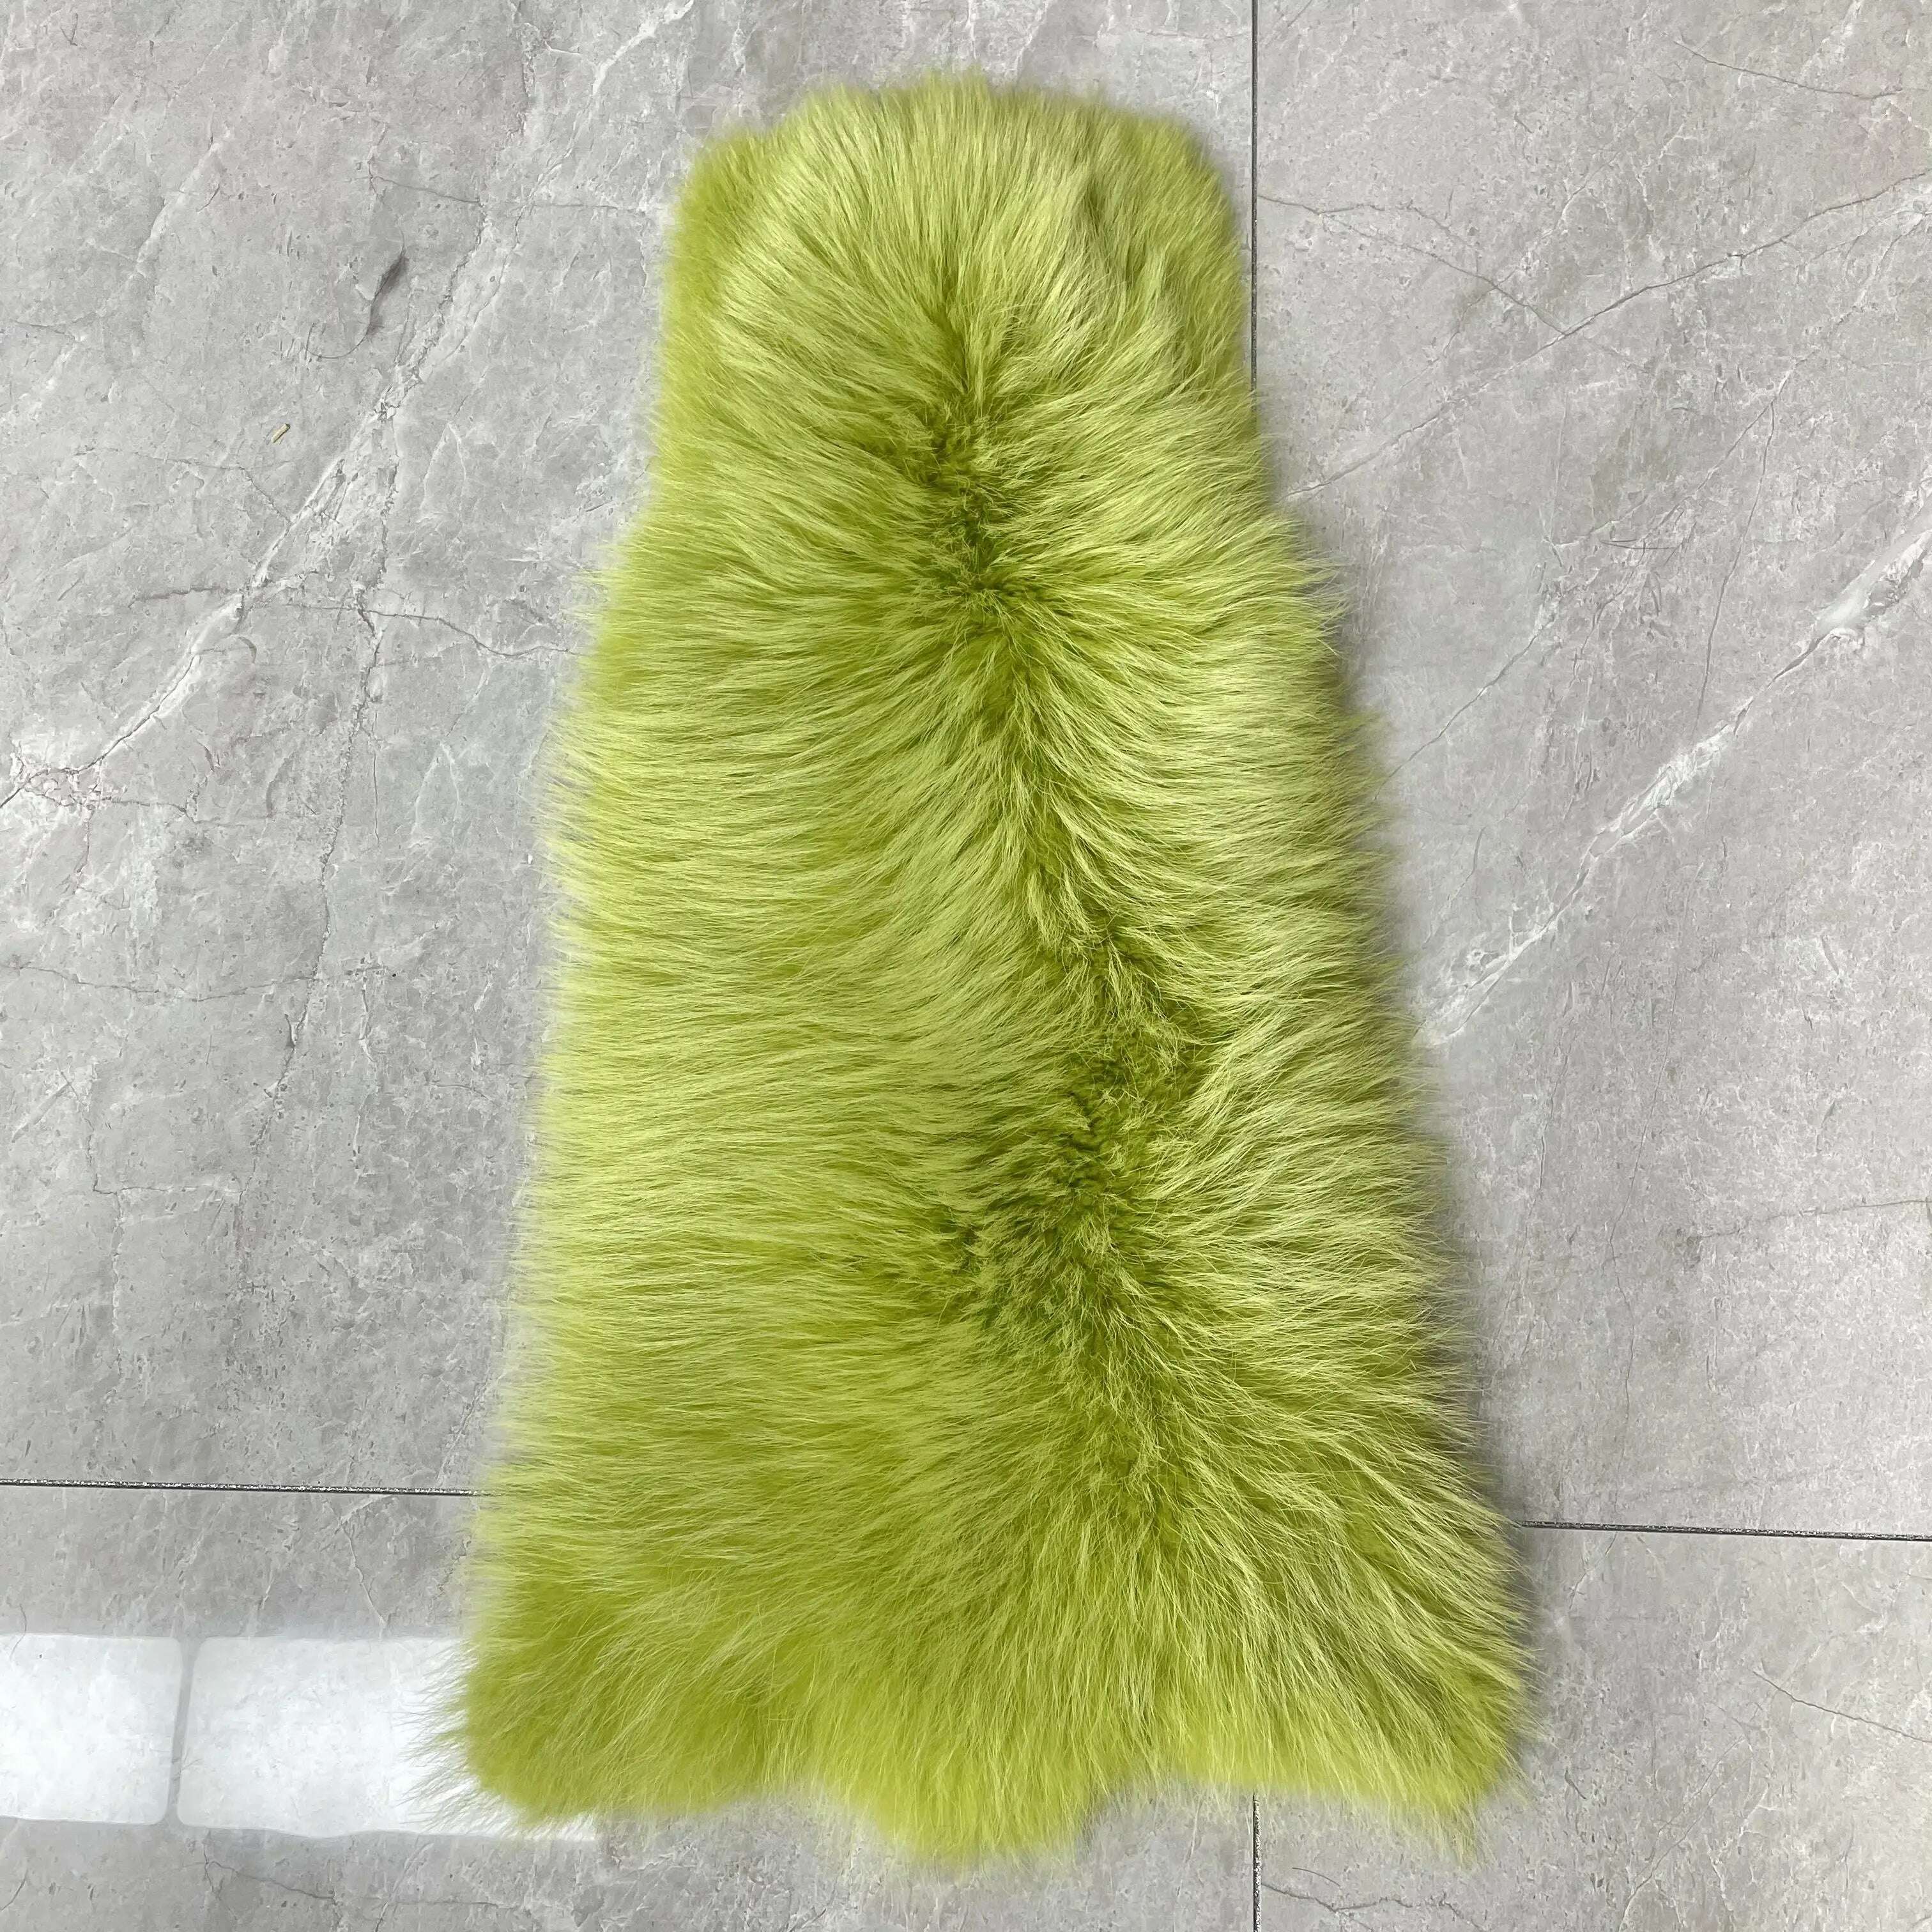 KIMLUD, Wholeskin Men Golden Fox Fur Long Coats Shawl Collar Winter Overcoats Genuine Natural Fox Furs Jacket, Fruit Green / XS(88cm), KIMLUD Women's Clothes